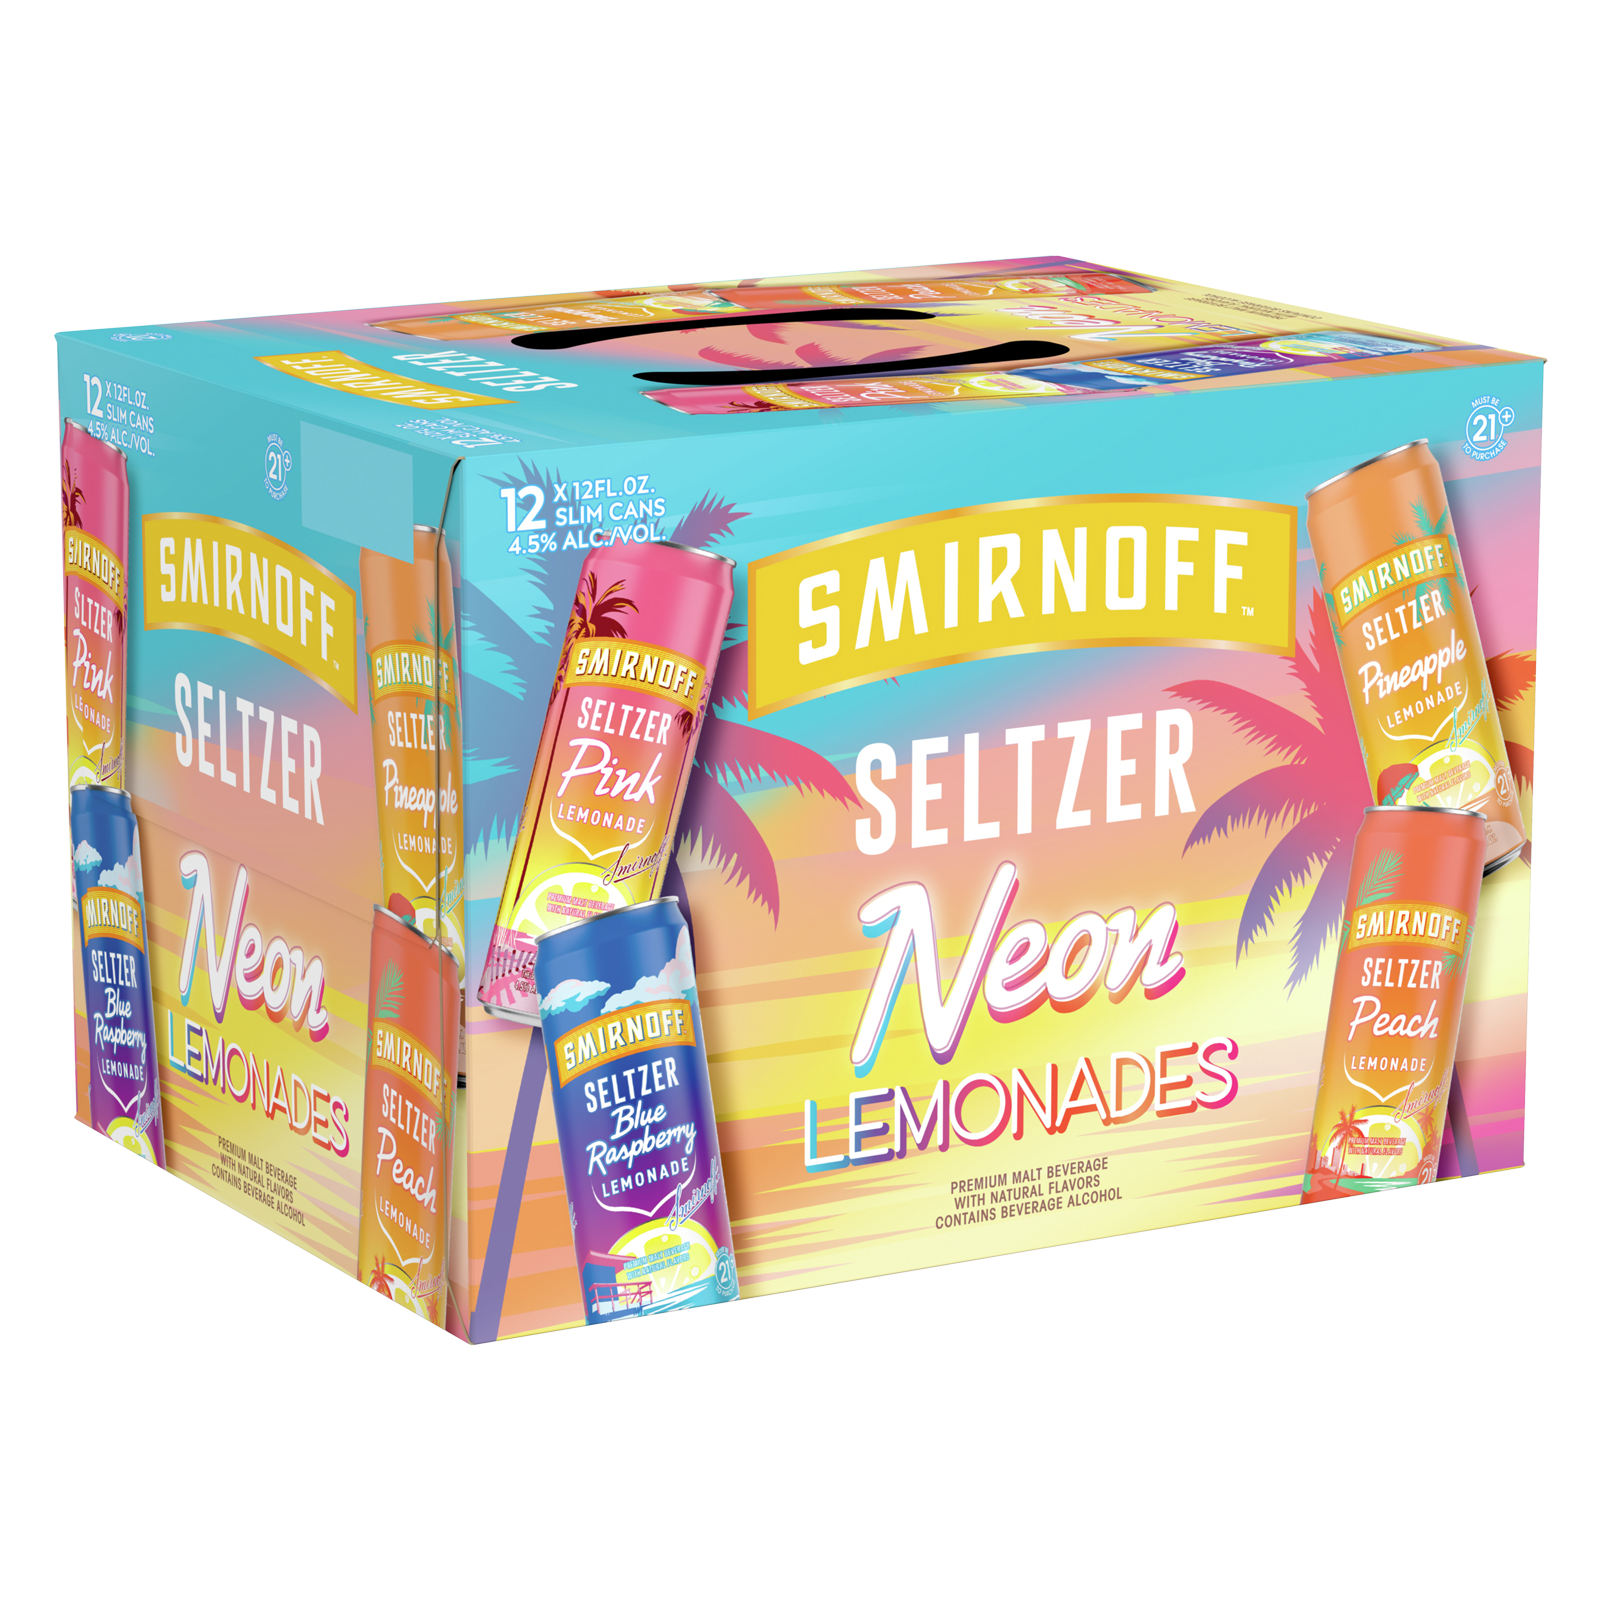 Smirnoff Seltzer Neon Lemonade 12pk 12oz Can 4.5% ABV